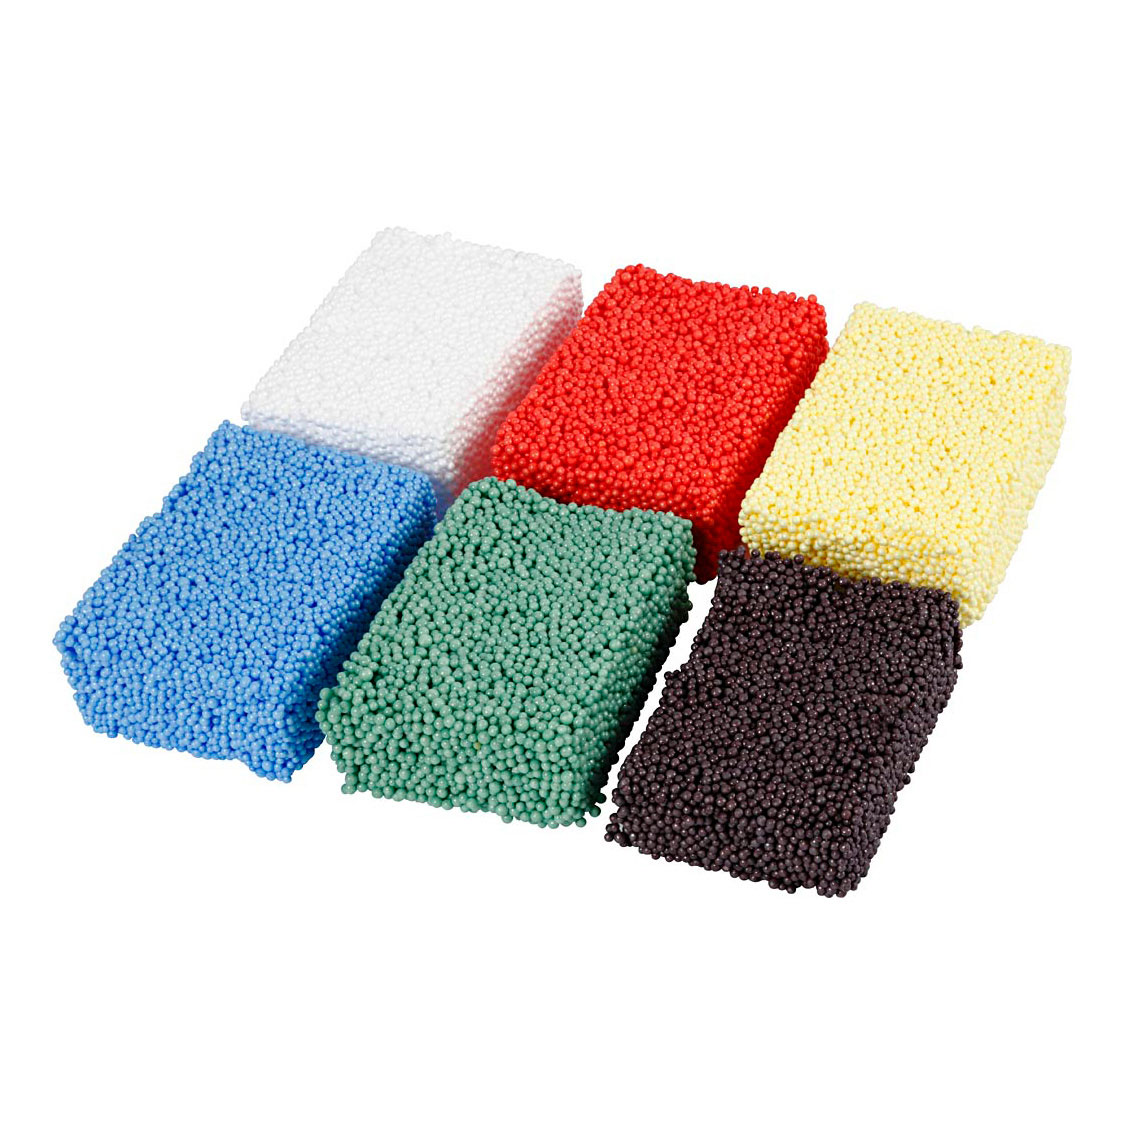 Couleurs standards Foam Clay souple, 6x10gr.